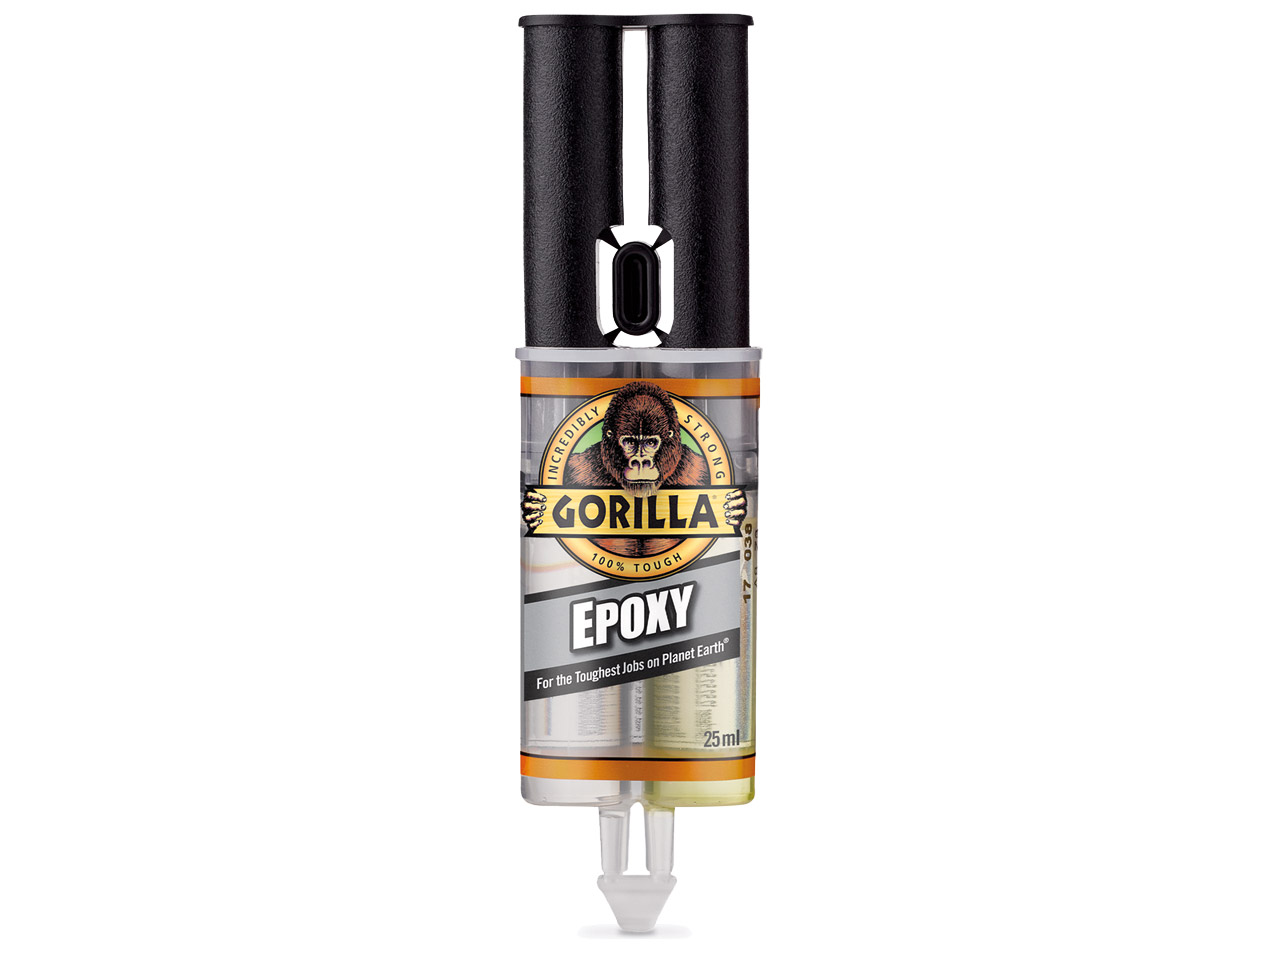 Gorilla Glue GES25 25ml 2 Part Clear Epoxy Resin Adhesive Syringe